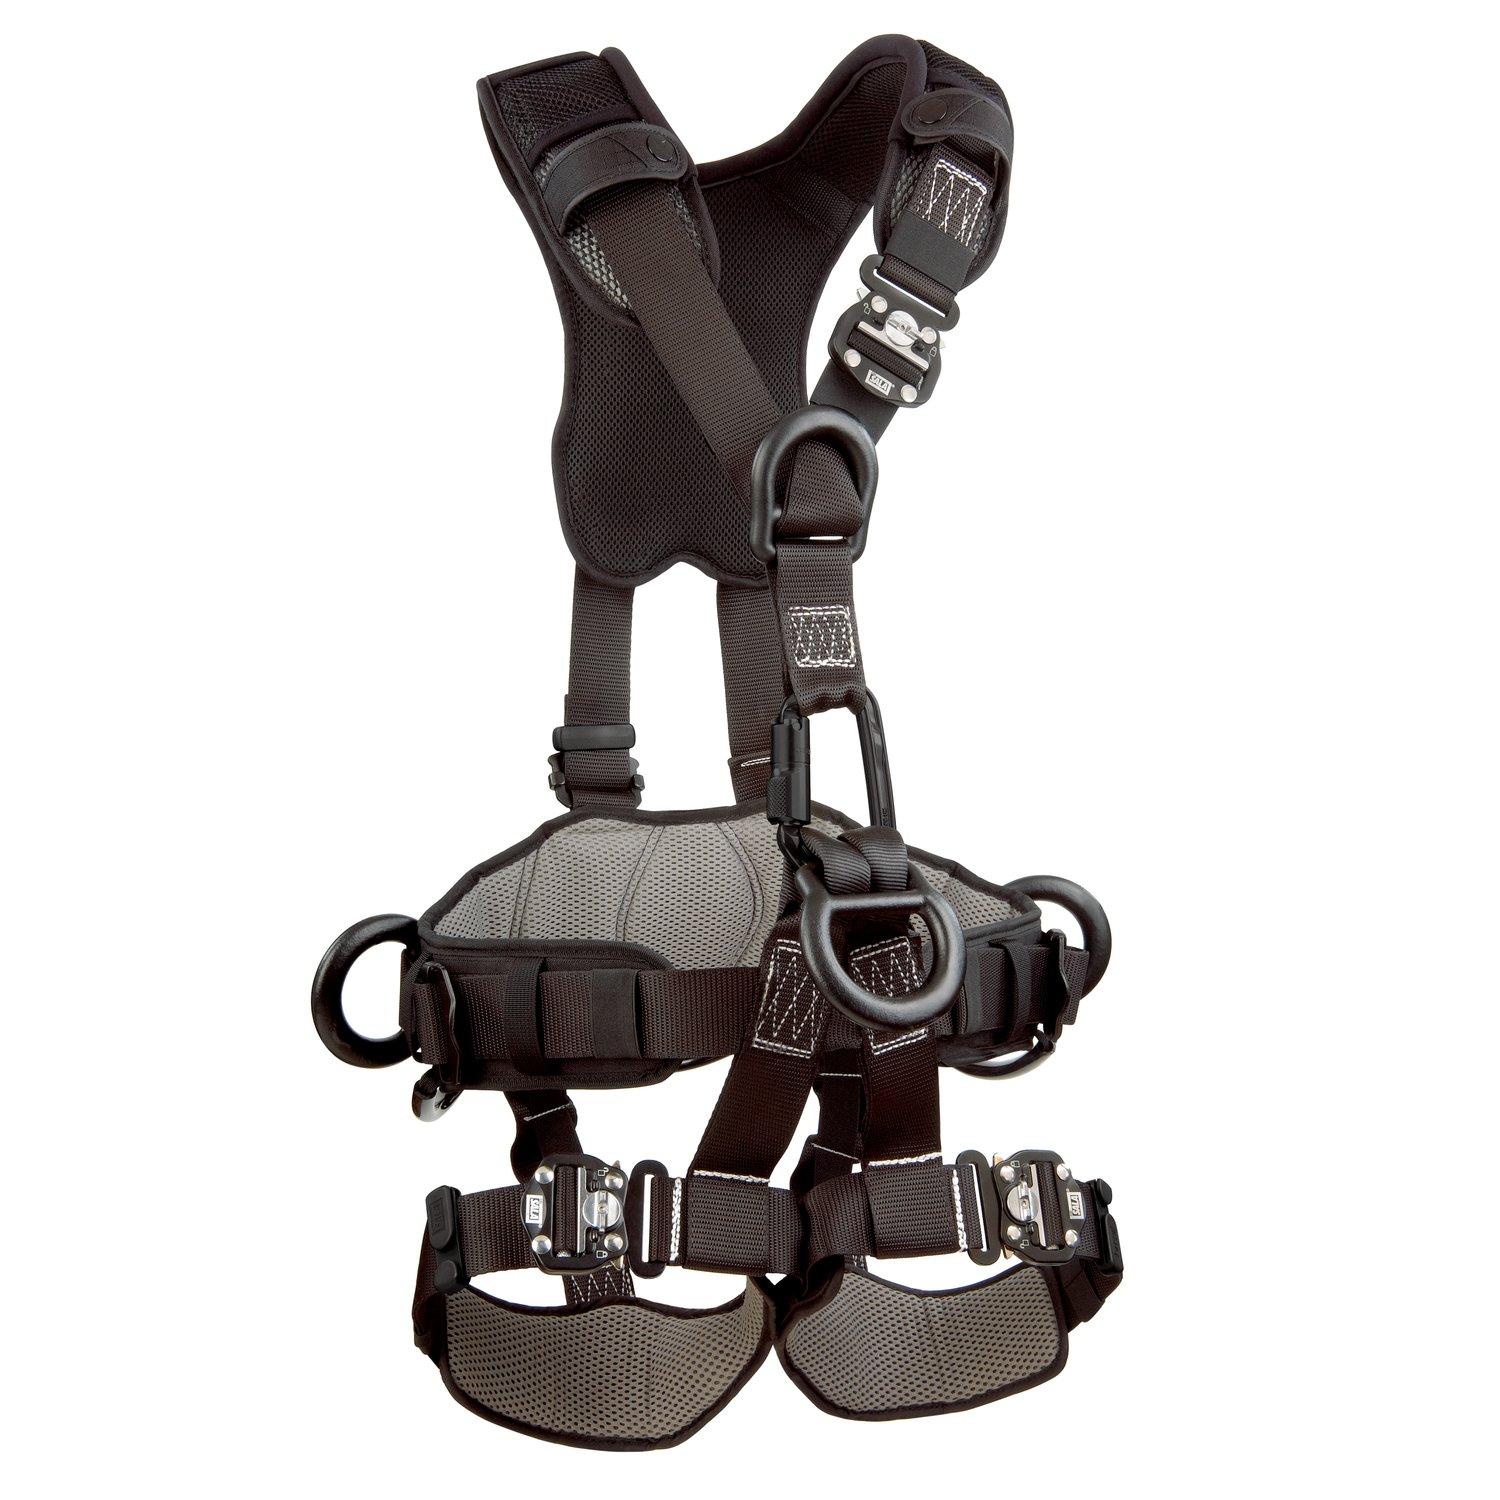 7100226829 - 3M DBI-SALA ExoFit NEX Comfort Rope Access
Climbing/Positioning/Rescue/Suspension Safety Harness 1113371, Black,
Medium